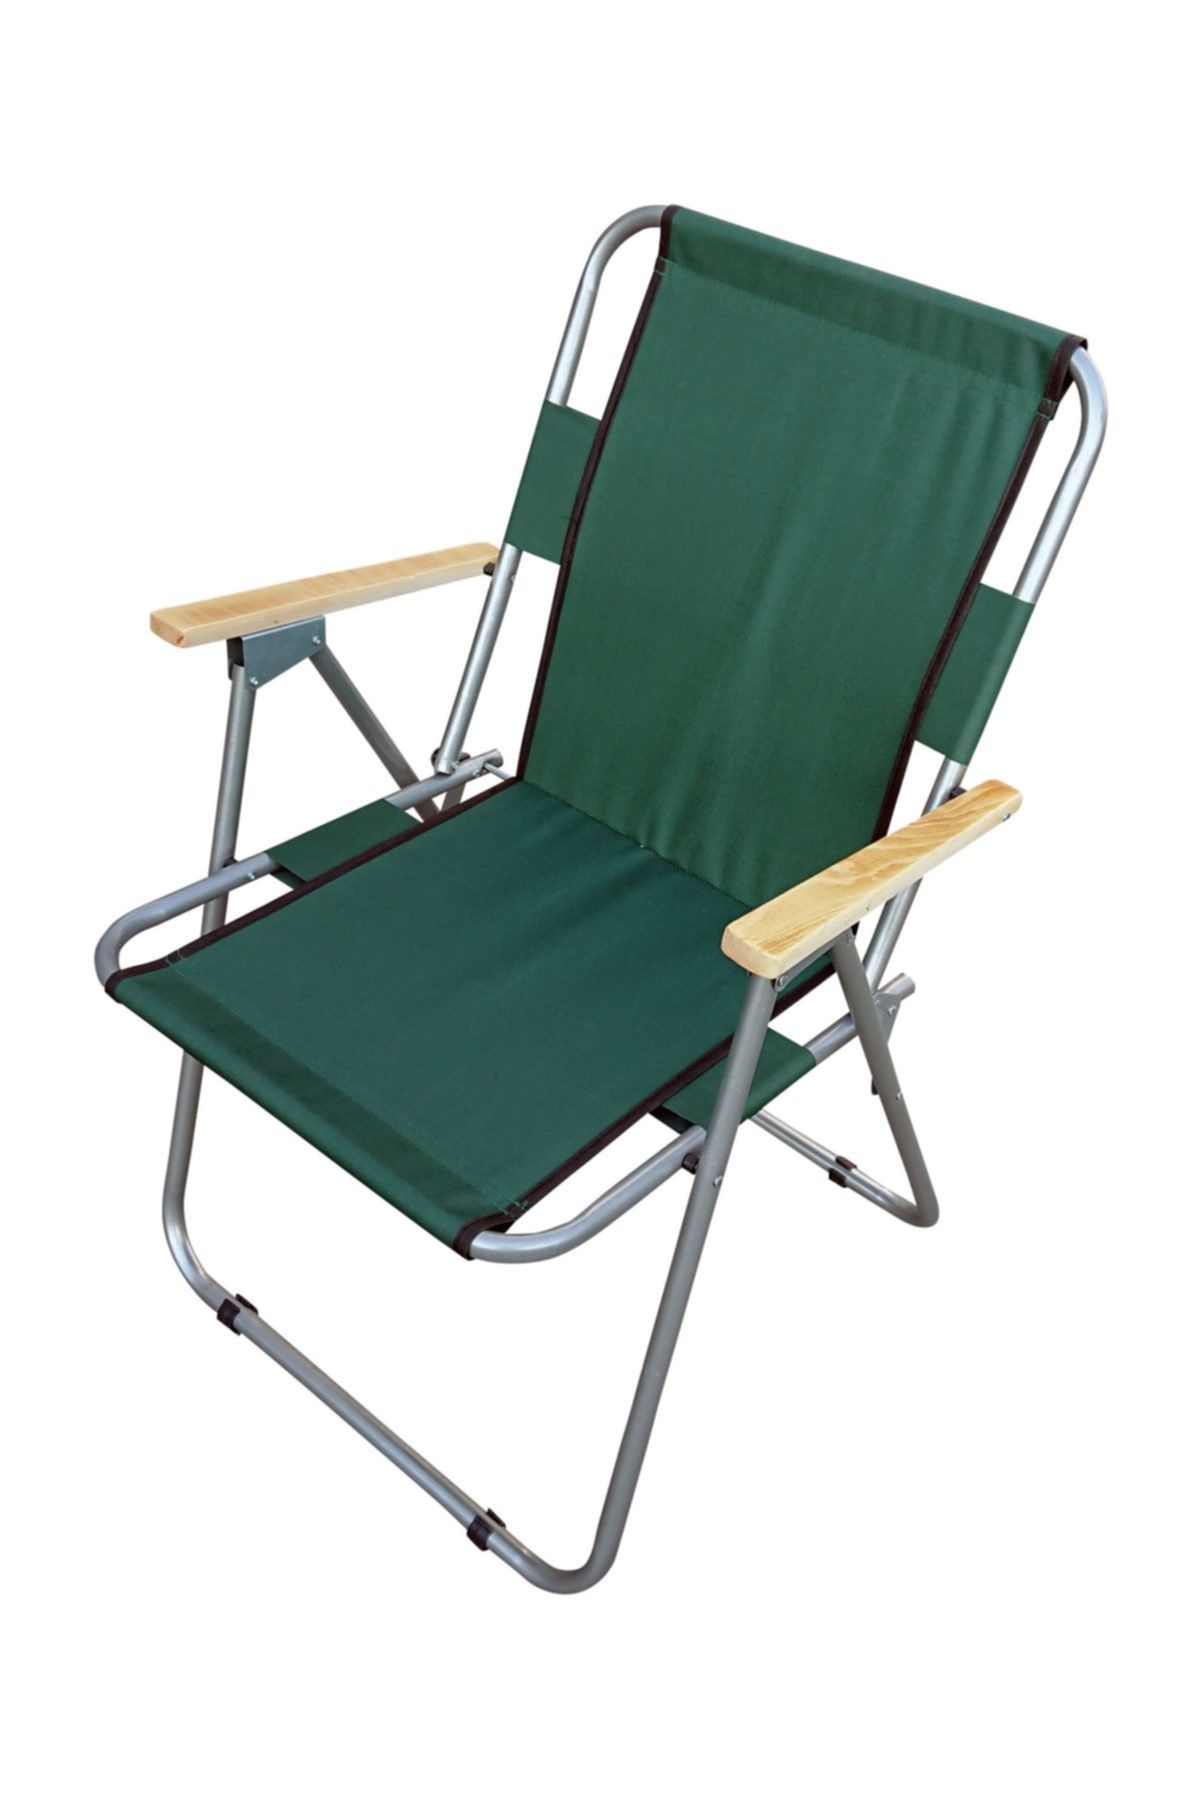 Weehome Ahşap Kollu Katlanabilir Piknik Kamp Balkon Sandalyesi Yeşil